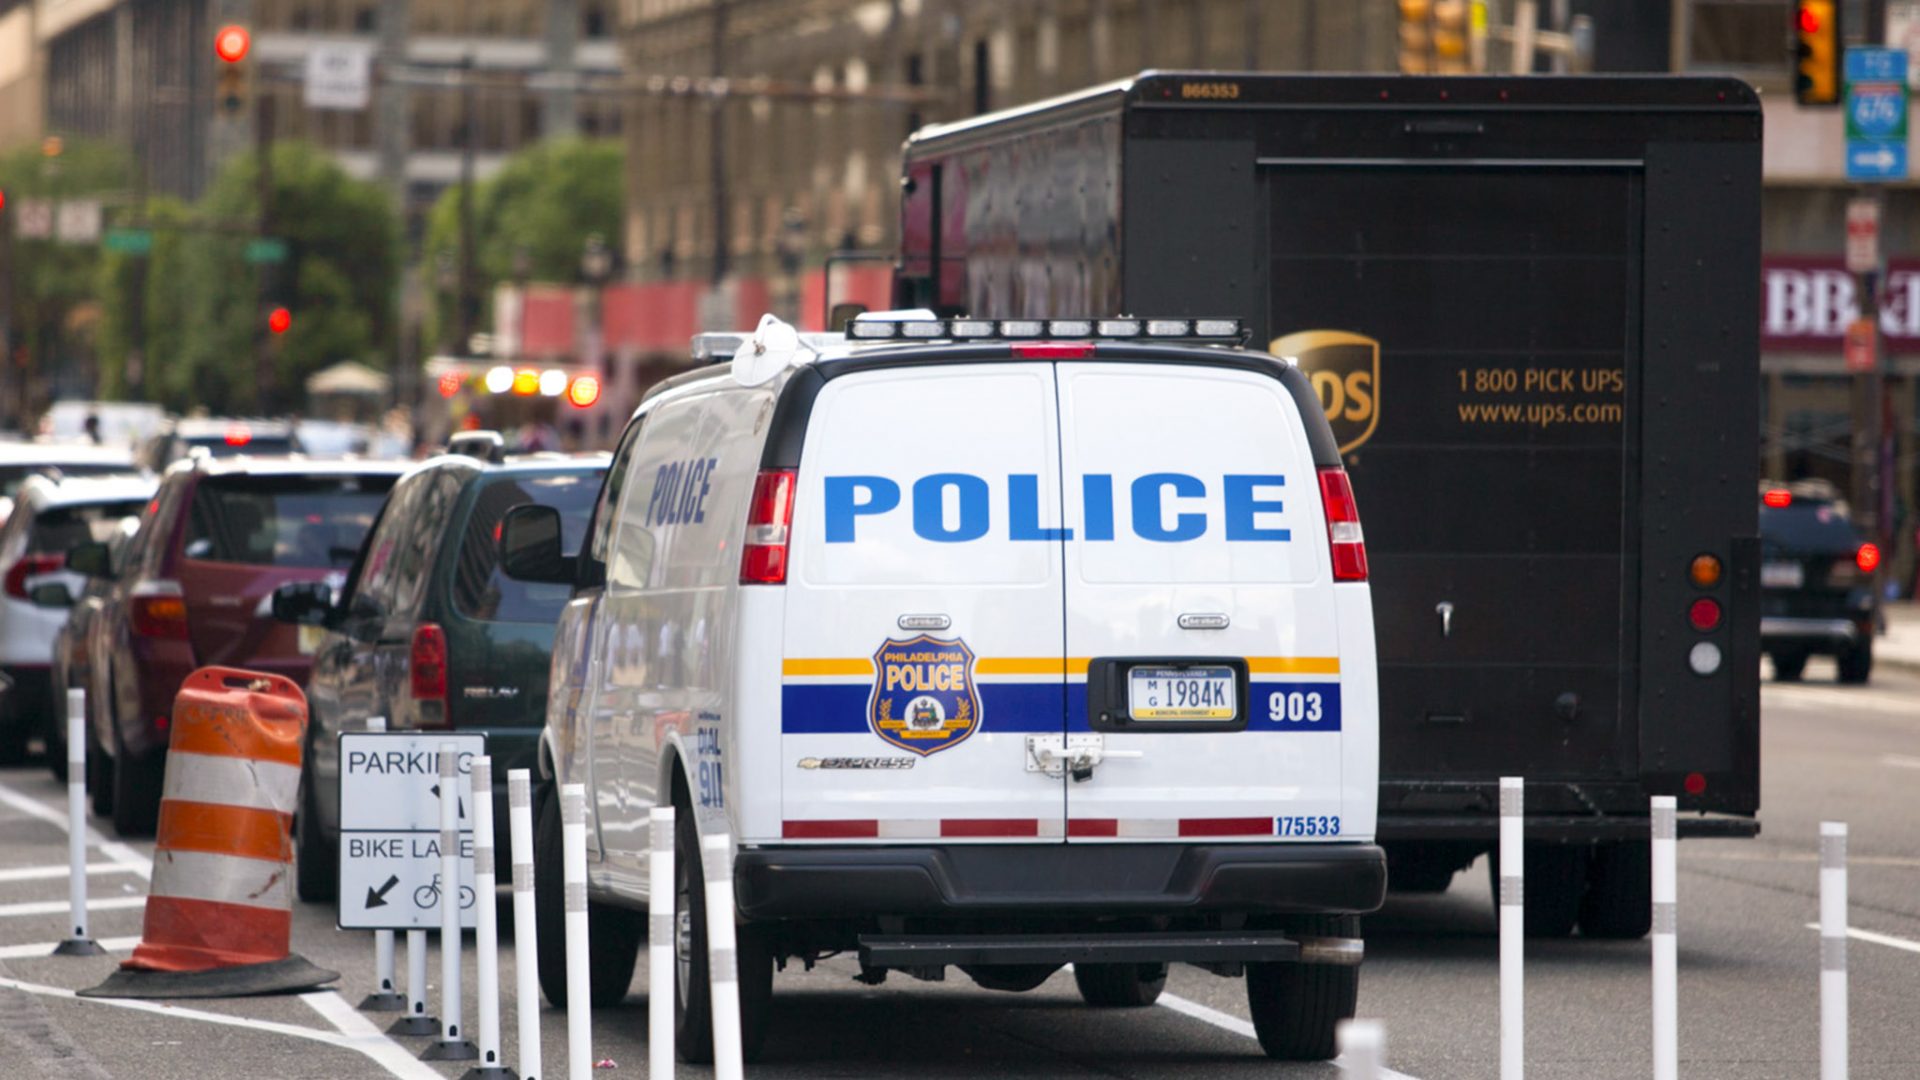 A Philadelphia Police van is seen on the street.